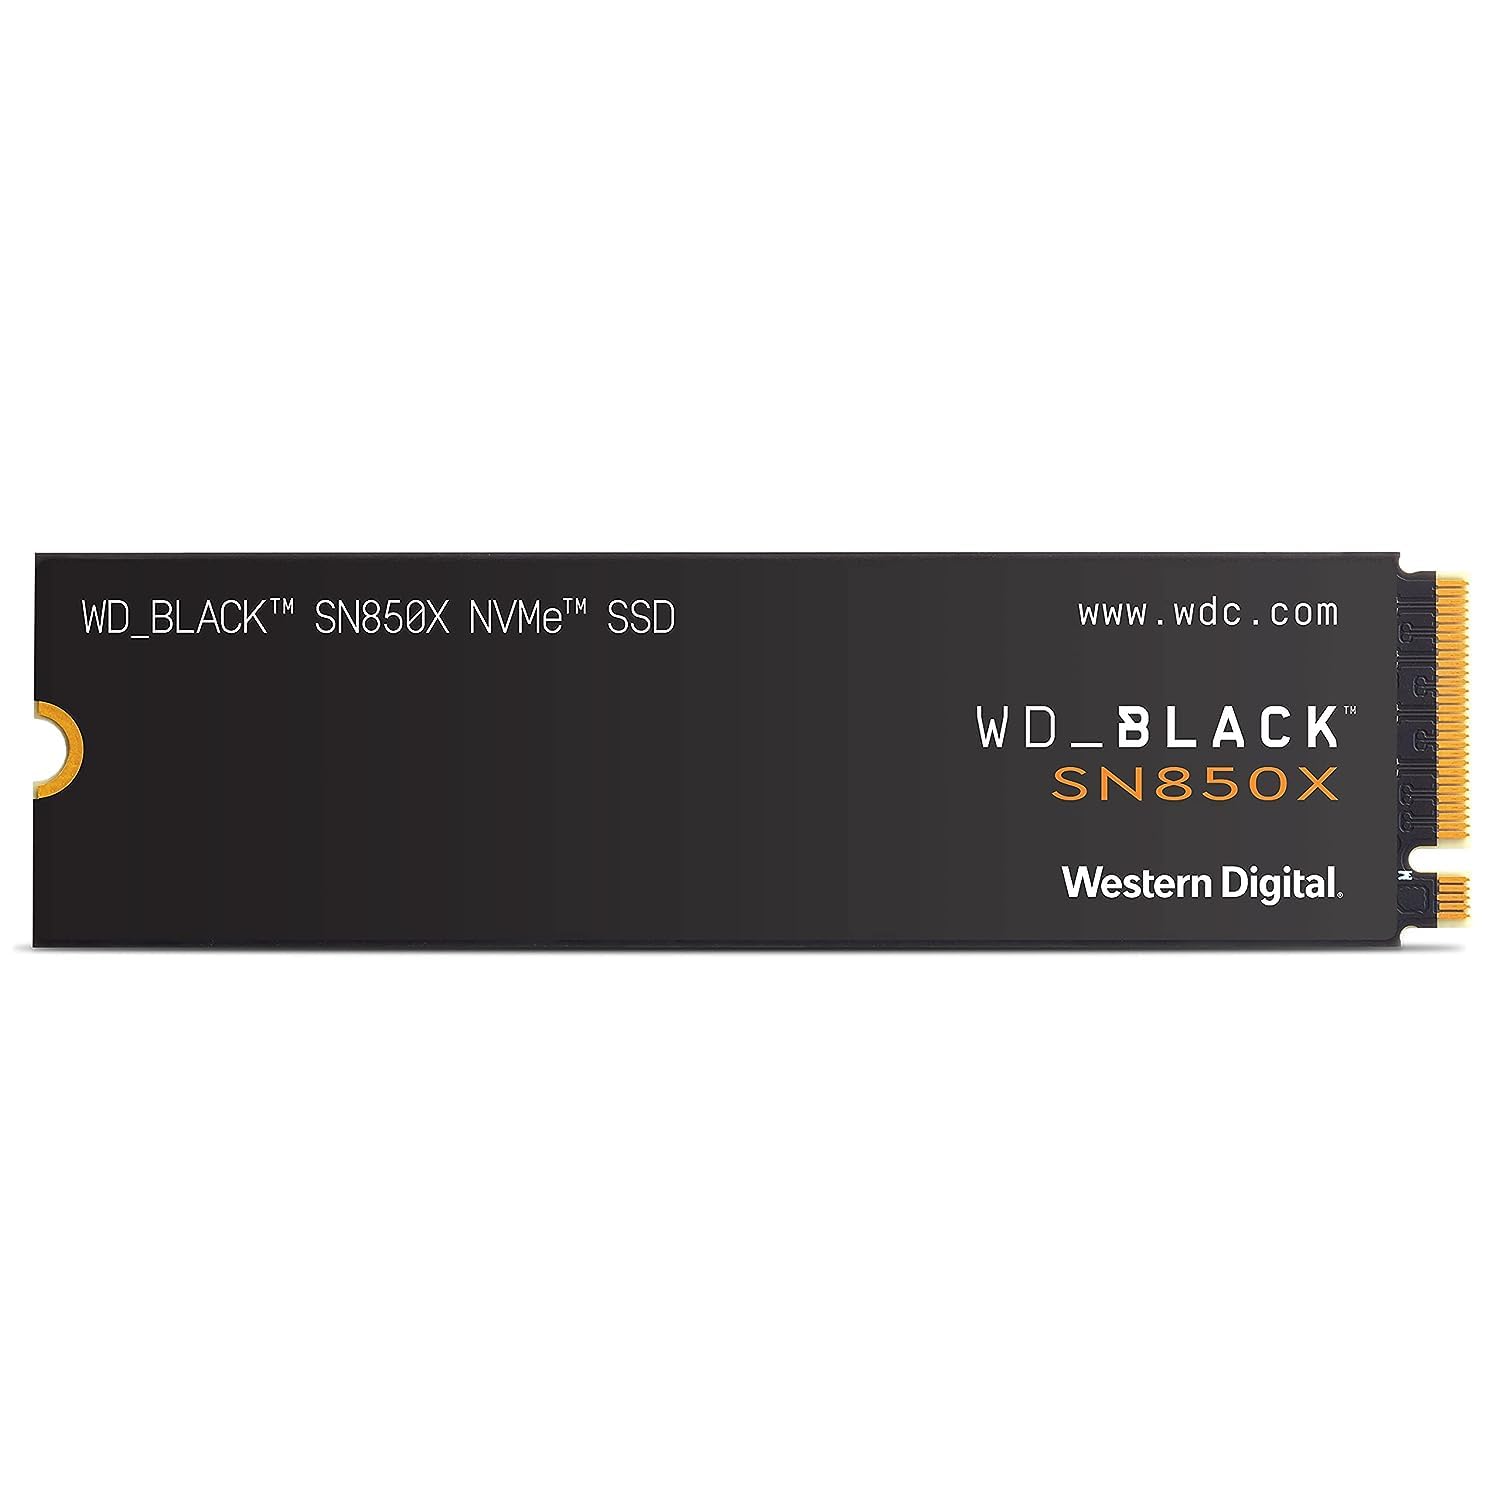 WD_BLACK 4TB SN850X NVMe Internal Gaming SSD Solid State Drive - Gen4 PCIe - $269.99